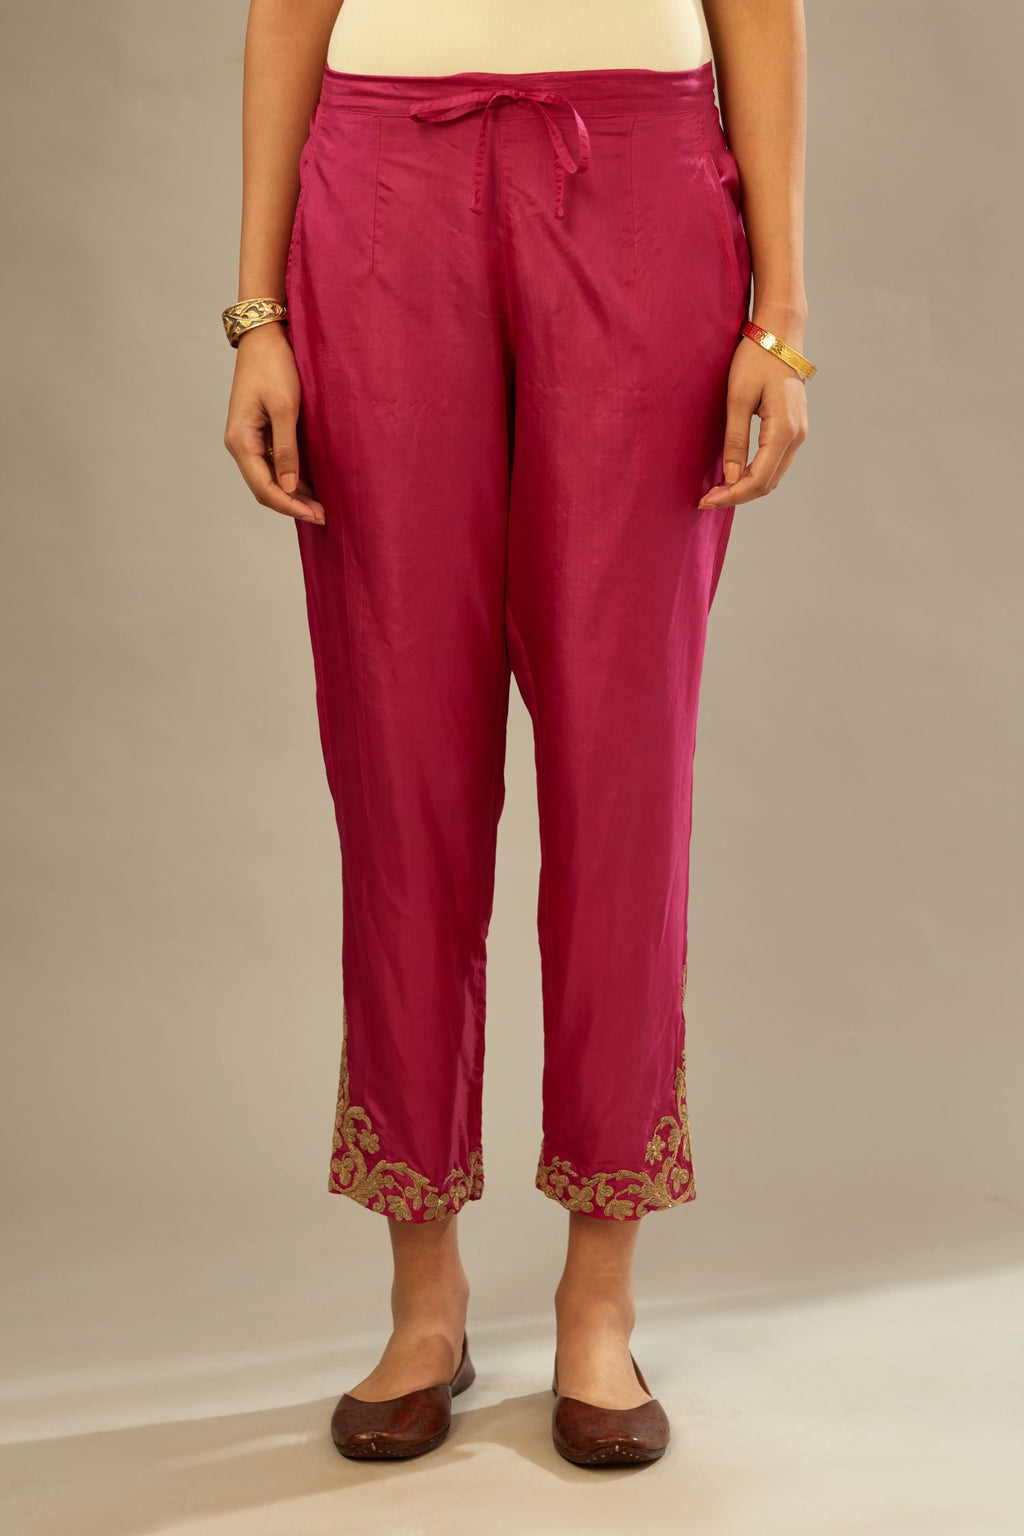 Jazzberry jam silk straight pants with dori embroidery at hem.